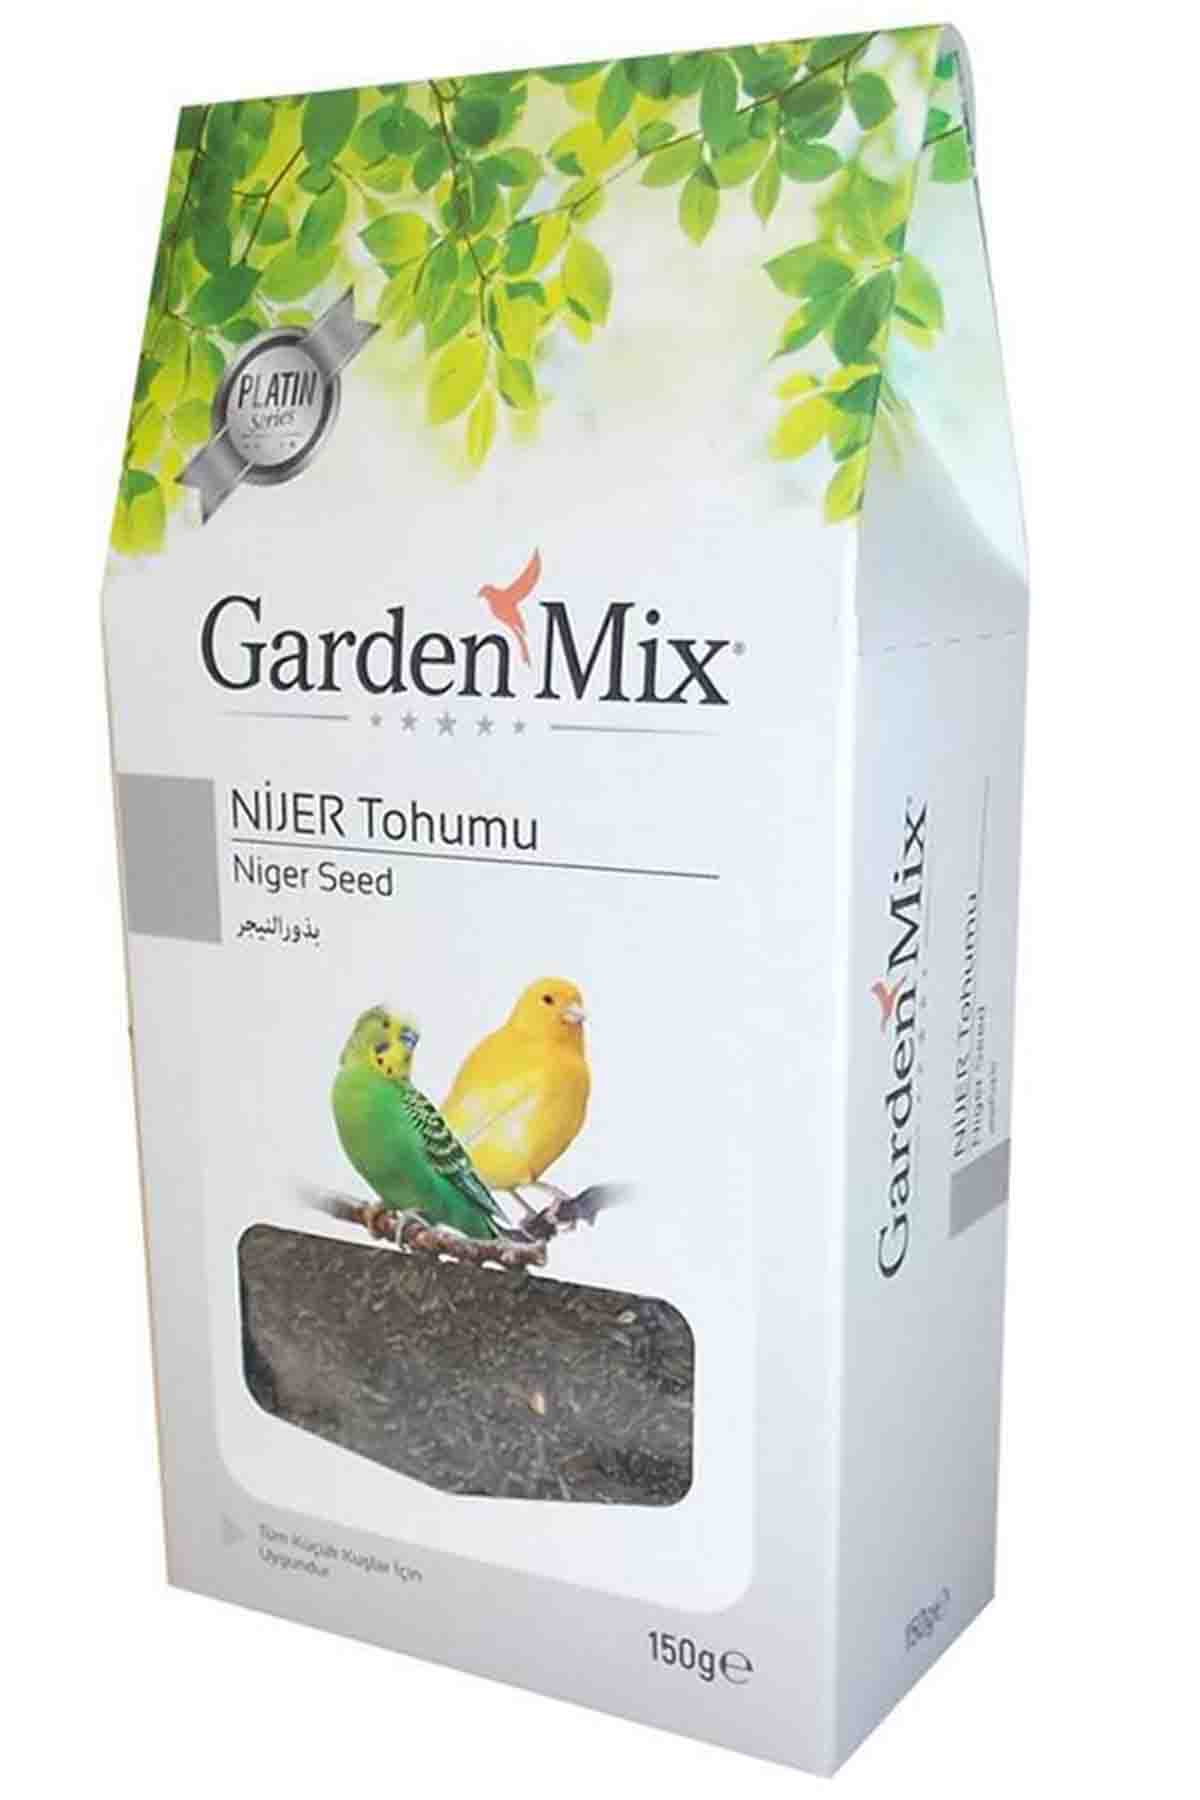  Garden Mix Platin Nijer Tohumu 150gr